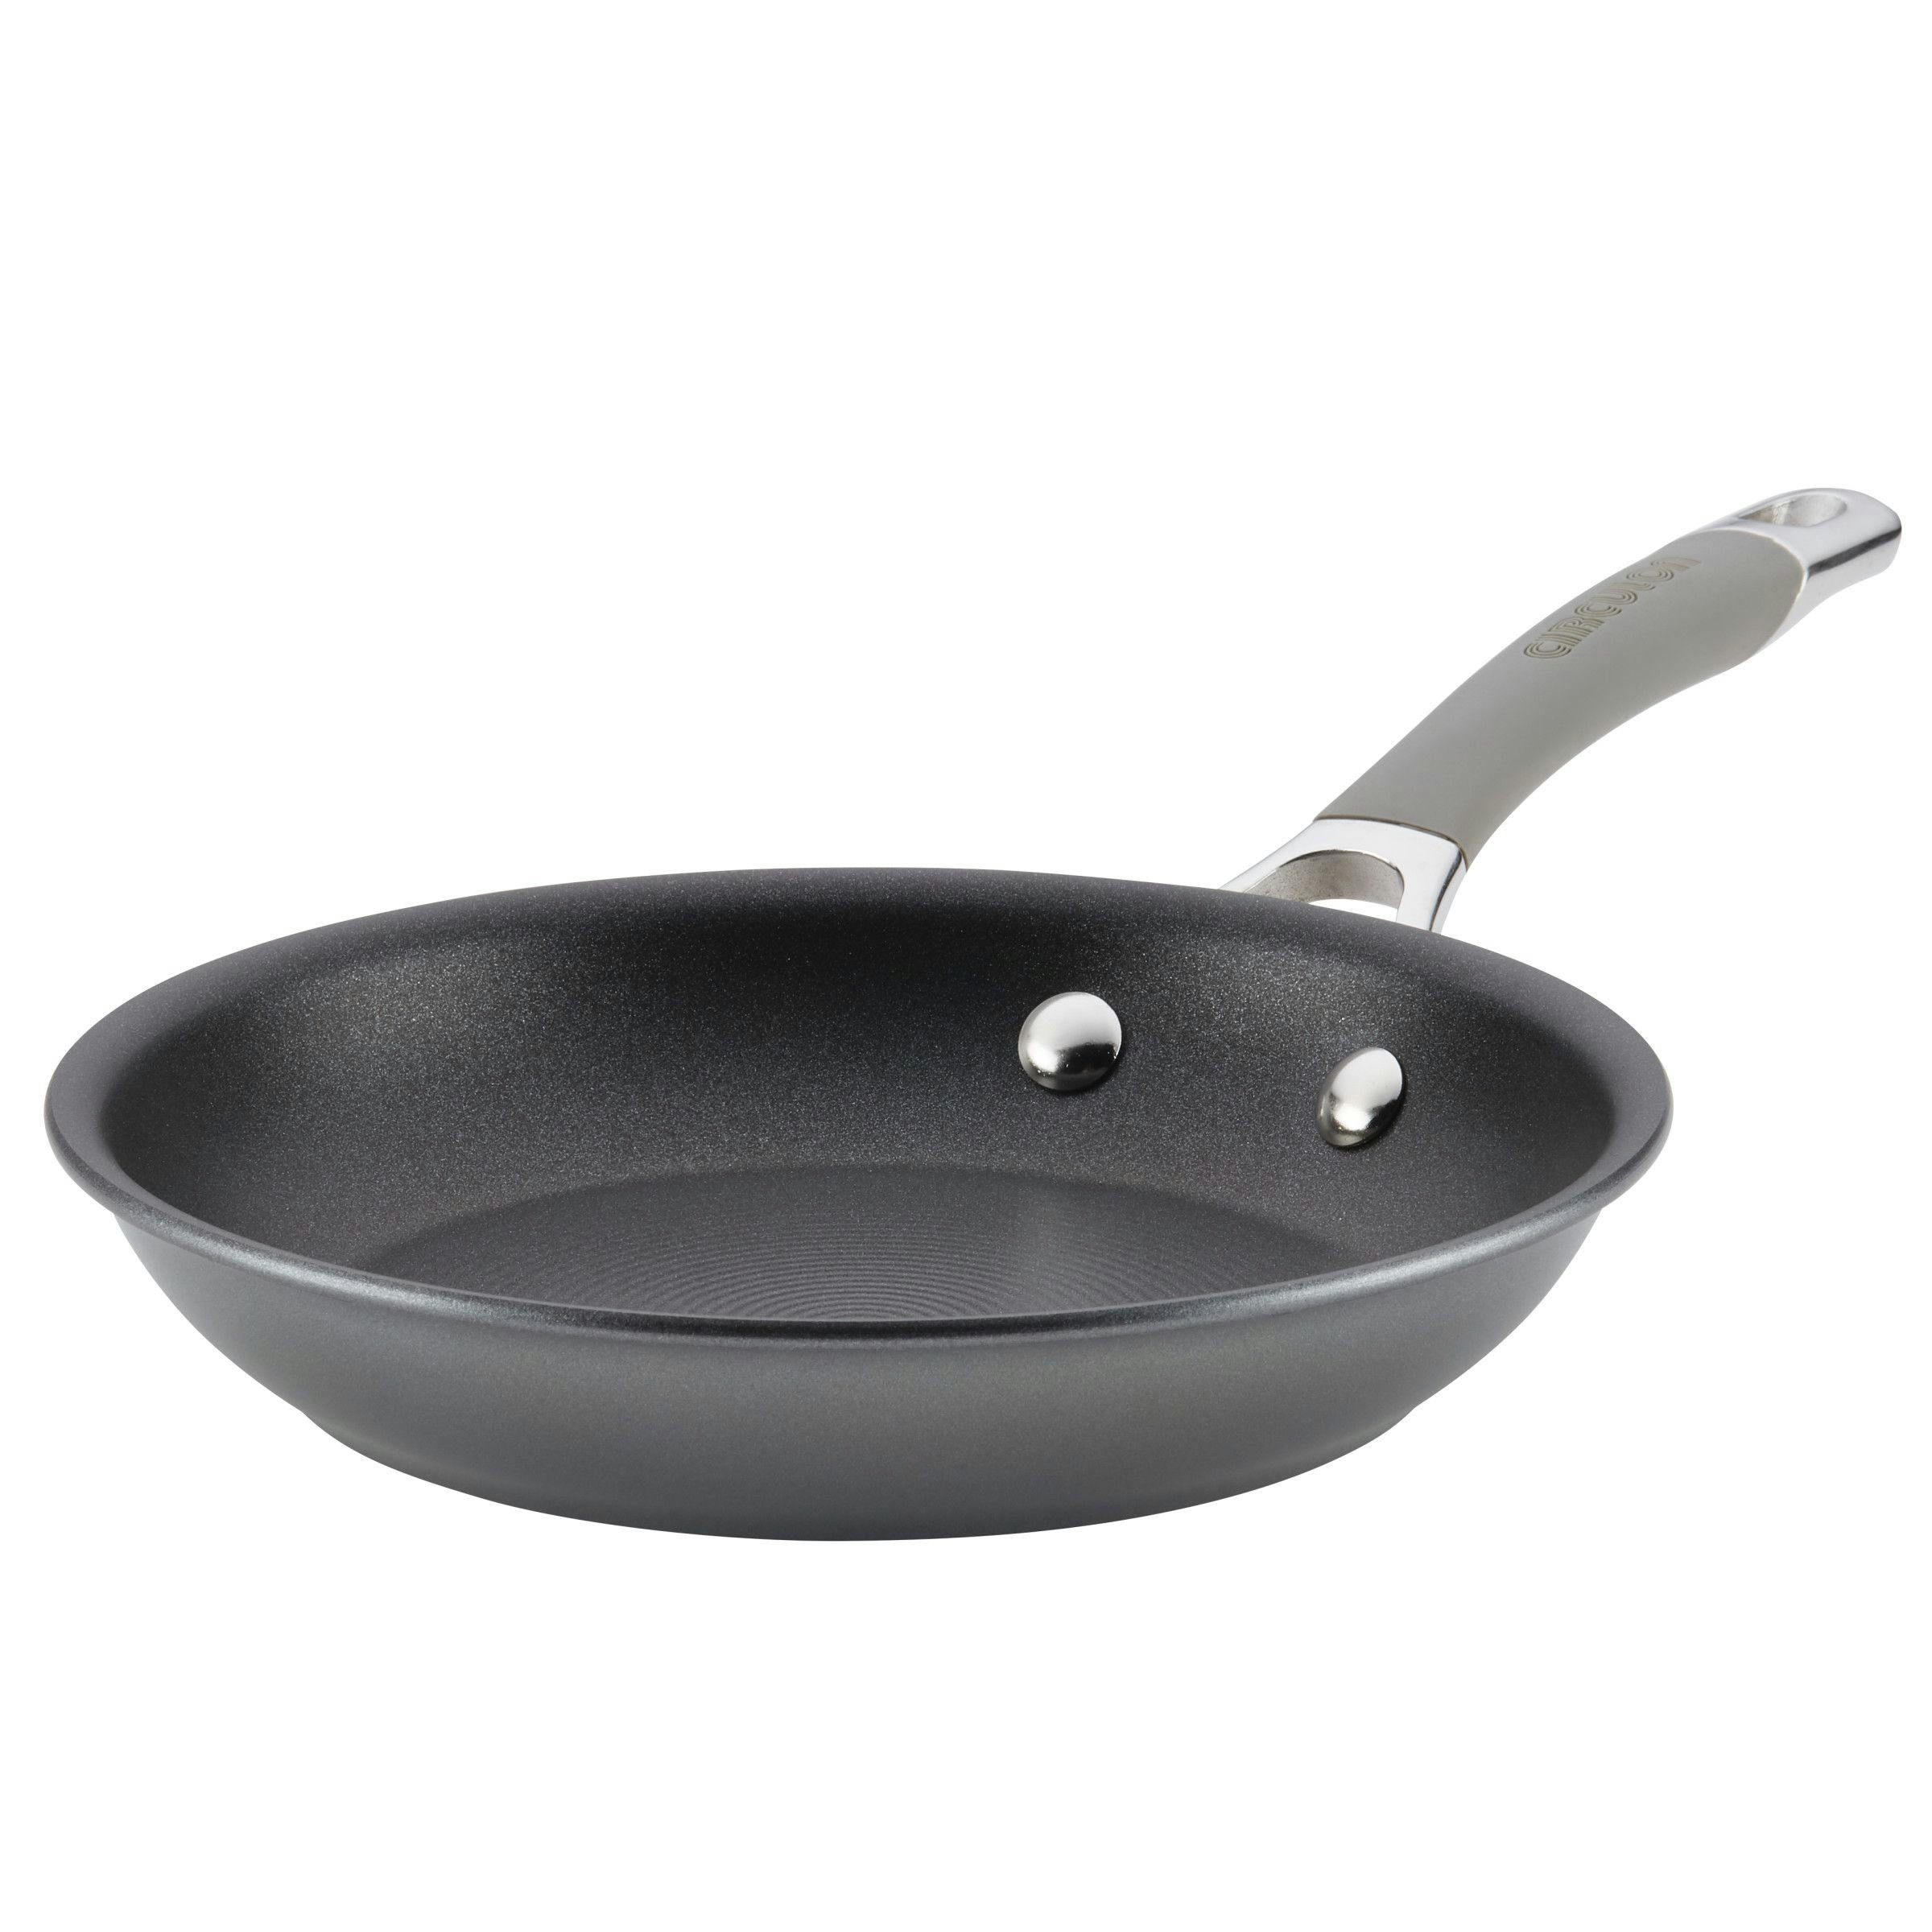 Circulon Elementum Hard-Anodized Nonstick Frying Pan, 8.5-Inch, Oyster Gray